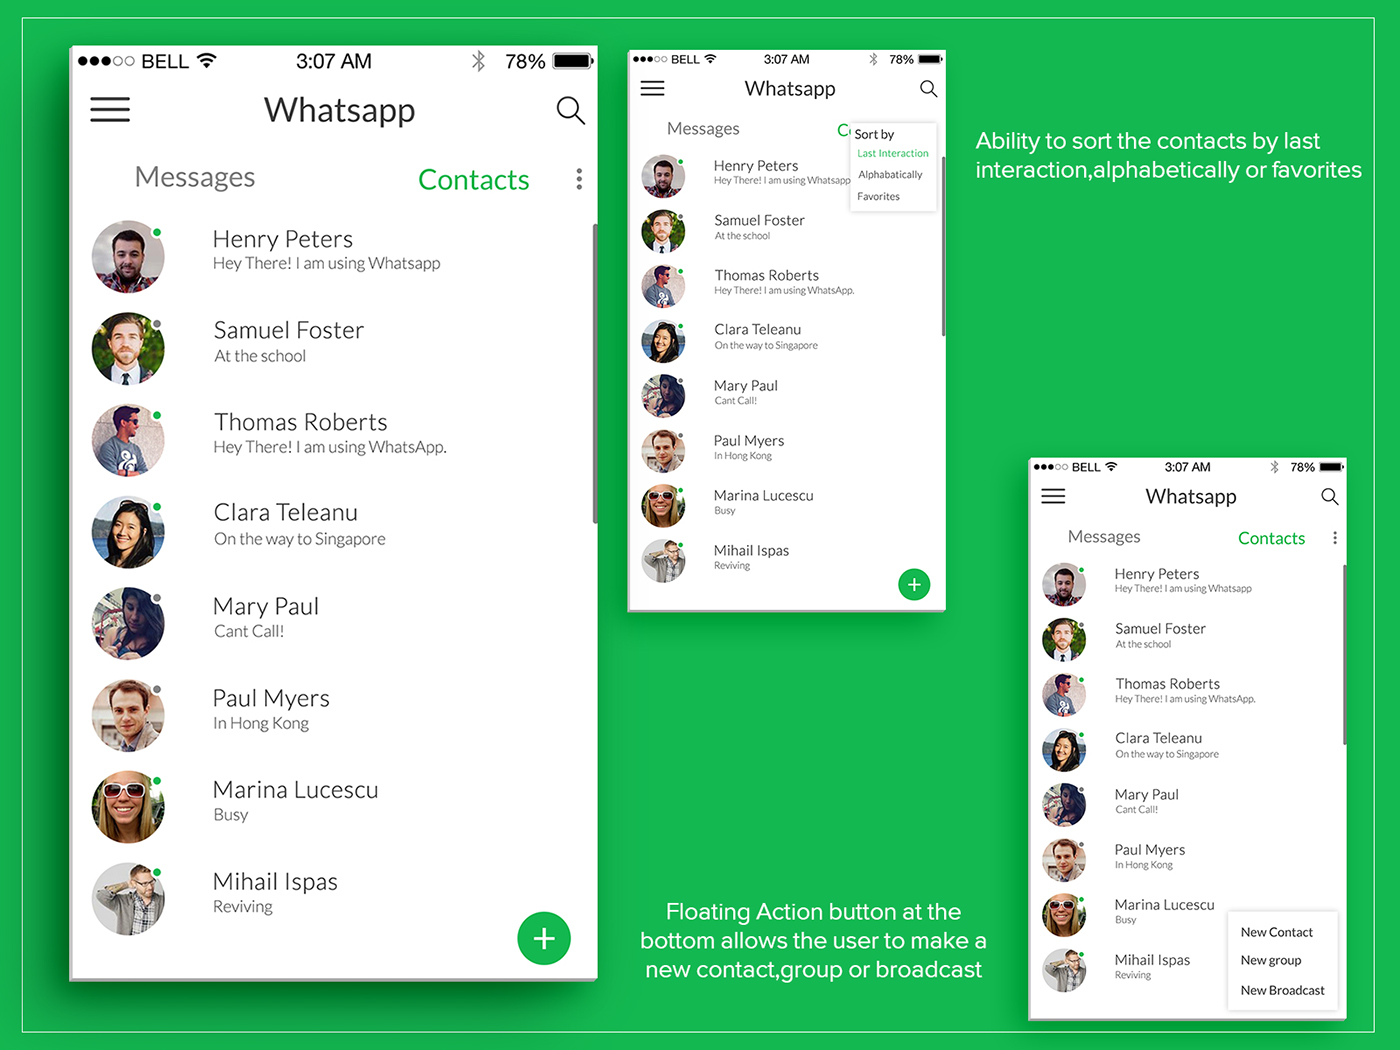 WhatsApp redesign RedesignConcept UI ux whatsappredesign chatui design